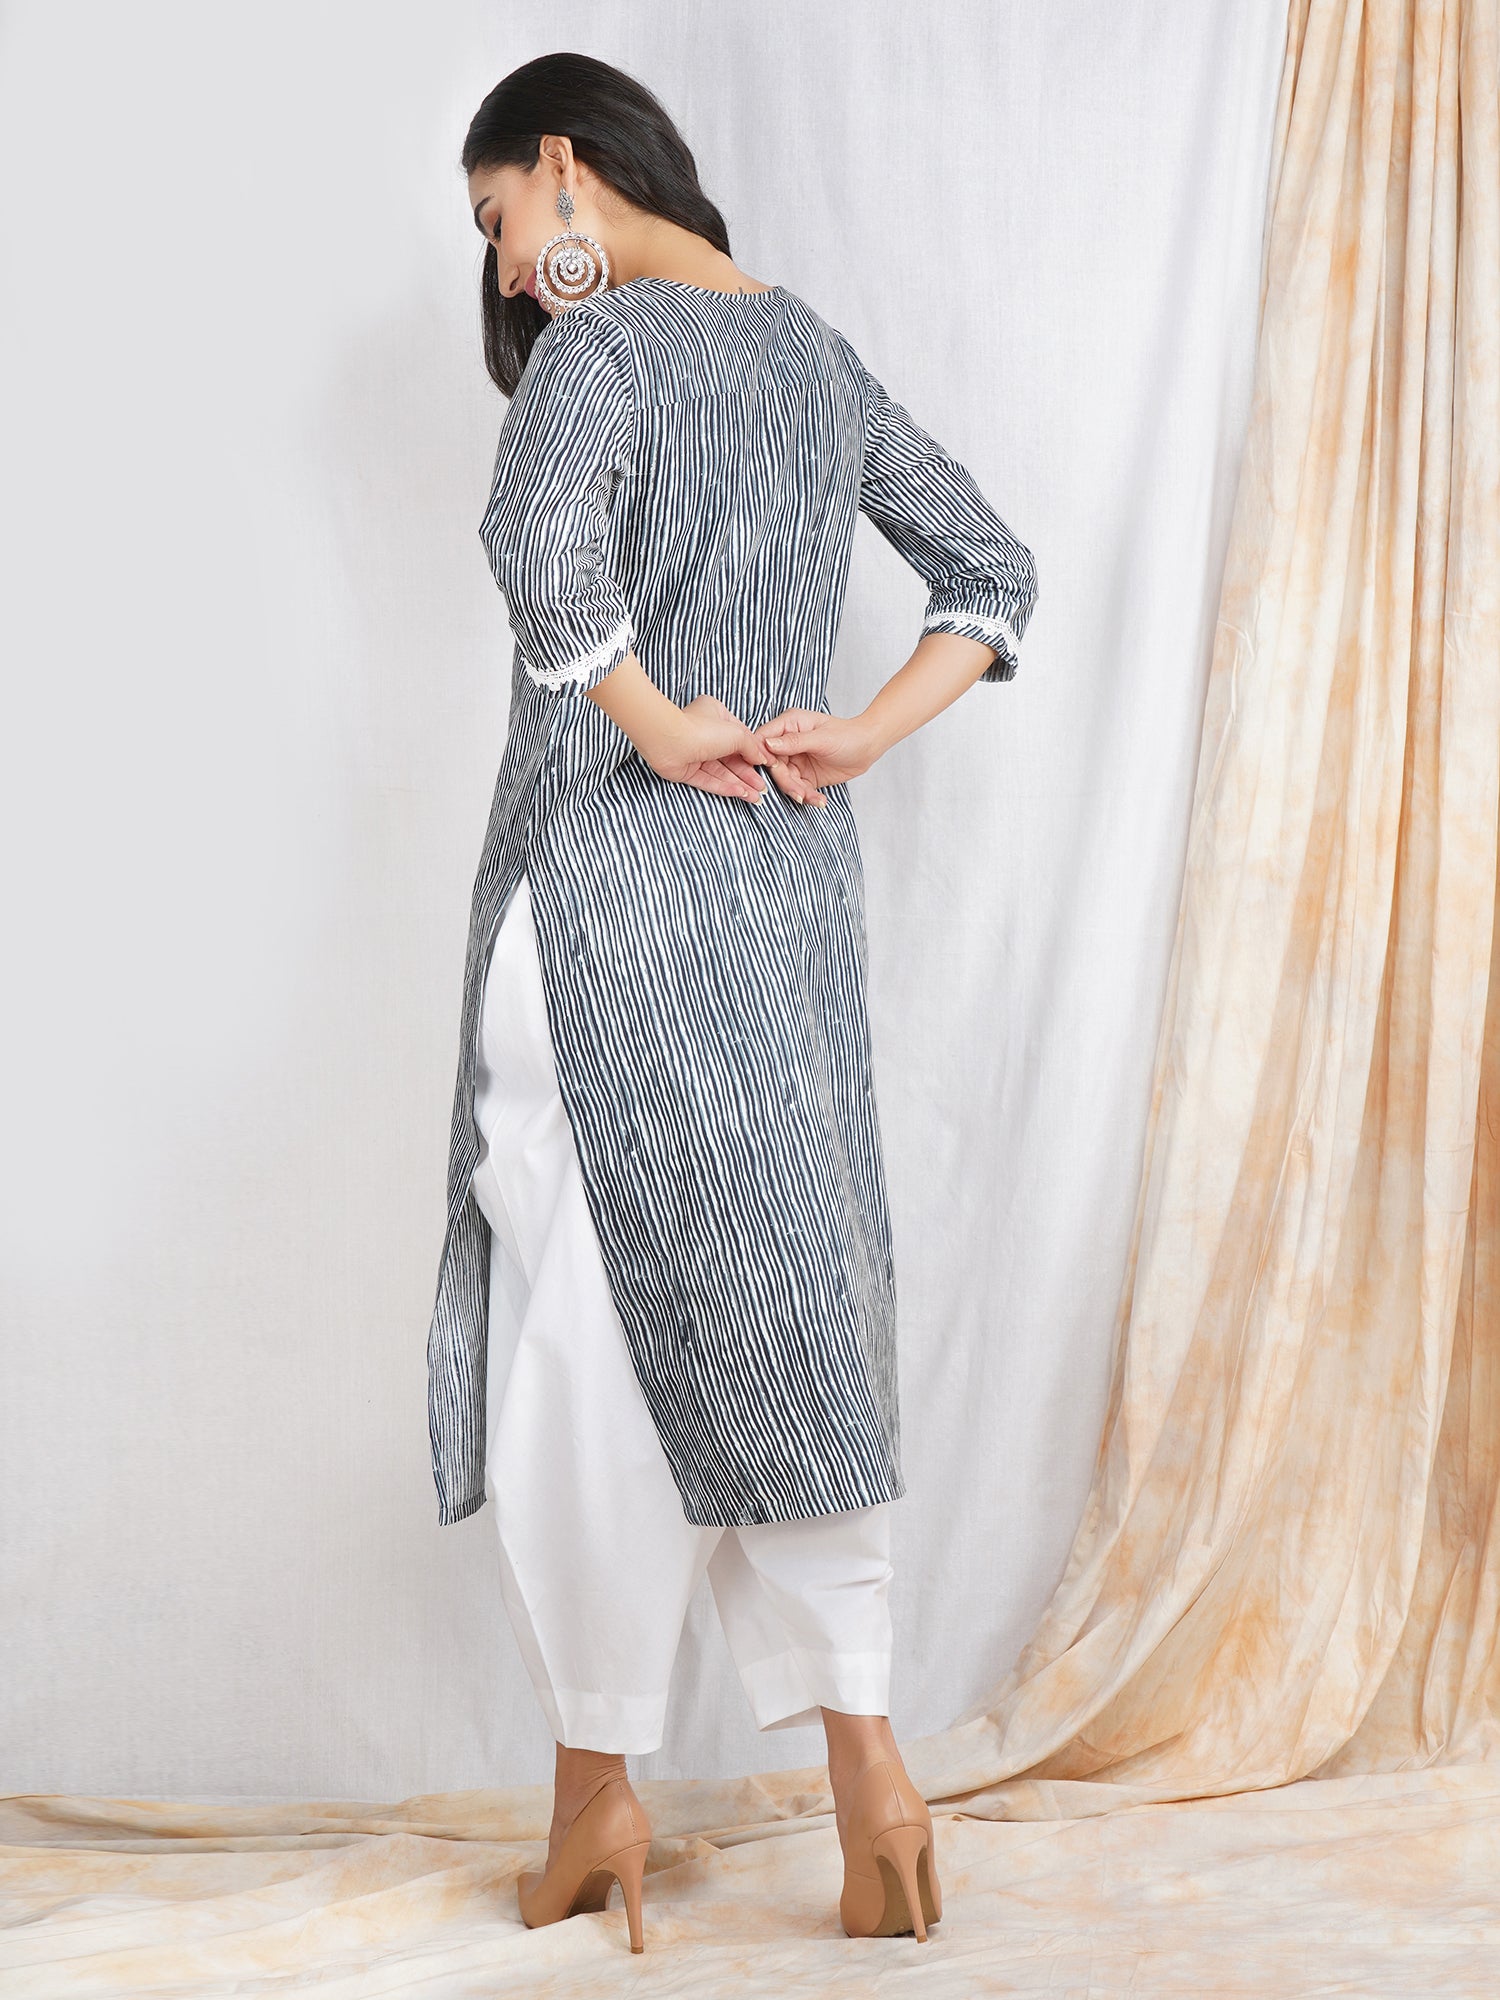 Shop Indo Western Garments for Women Online - Exclusive Collection |  Rachnaonline.com